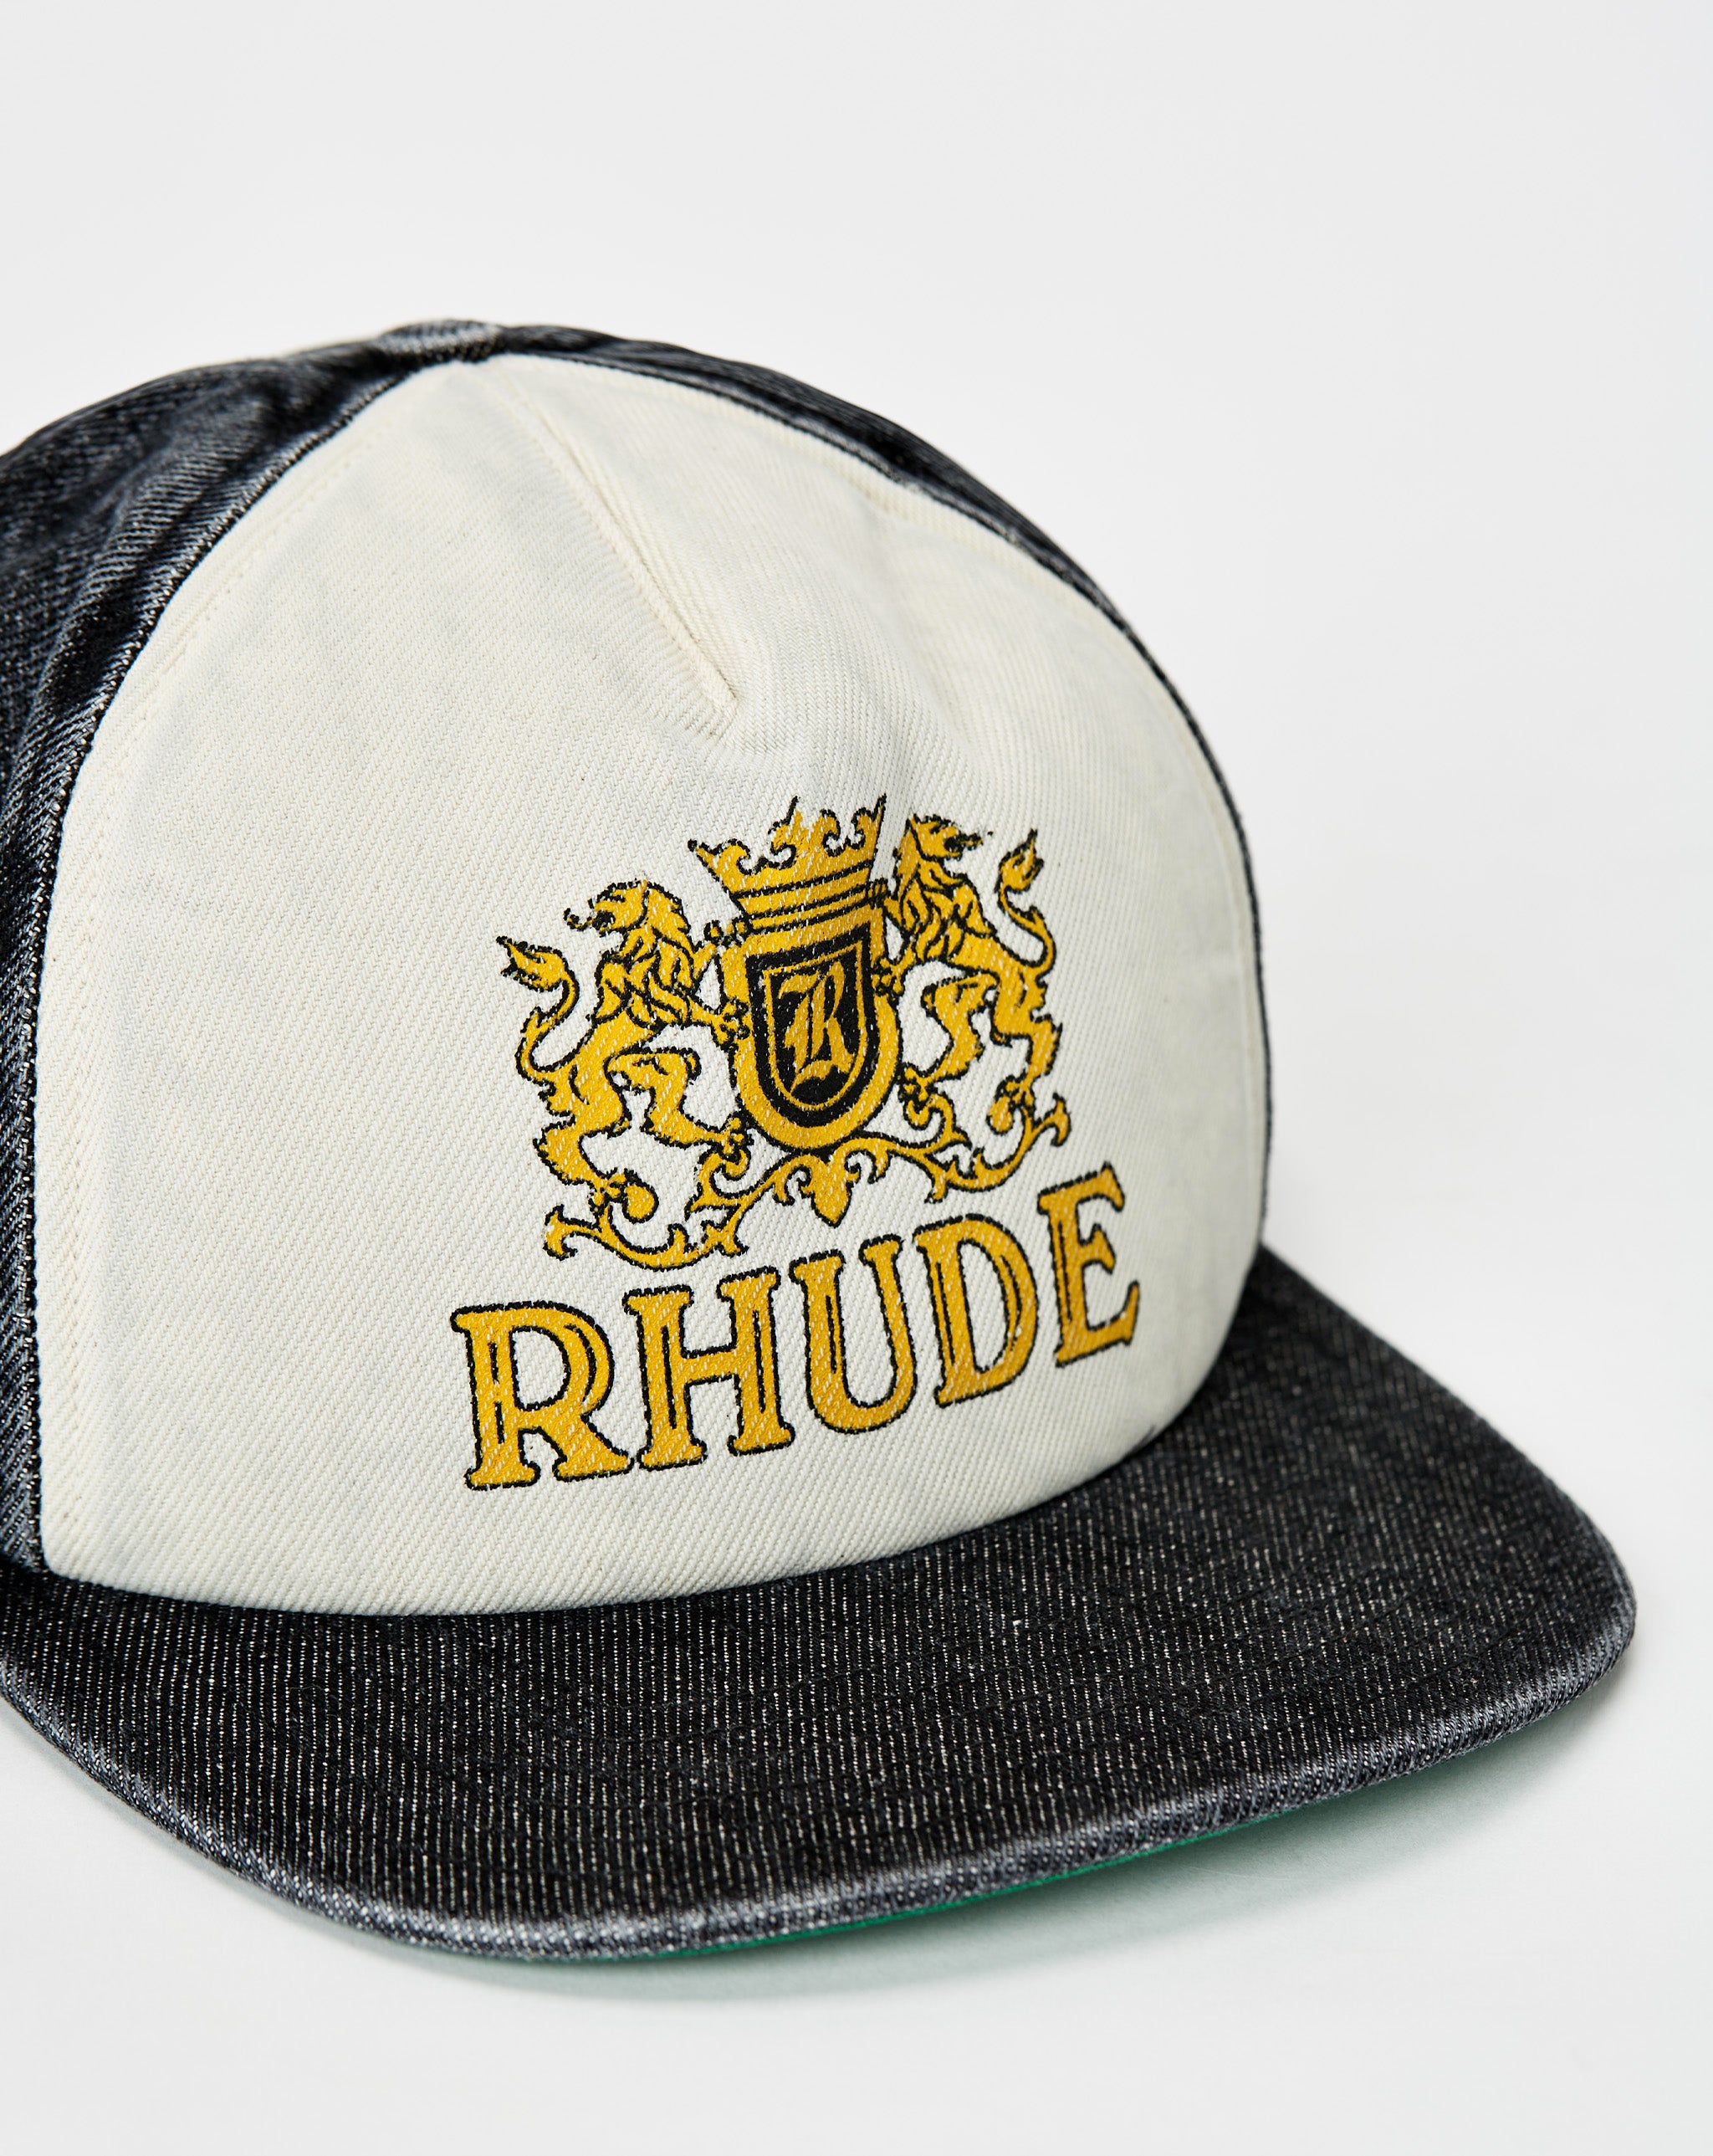 Rhude Structured Hat 3  - XHIBITION